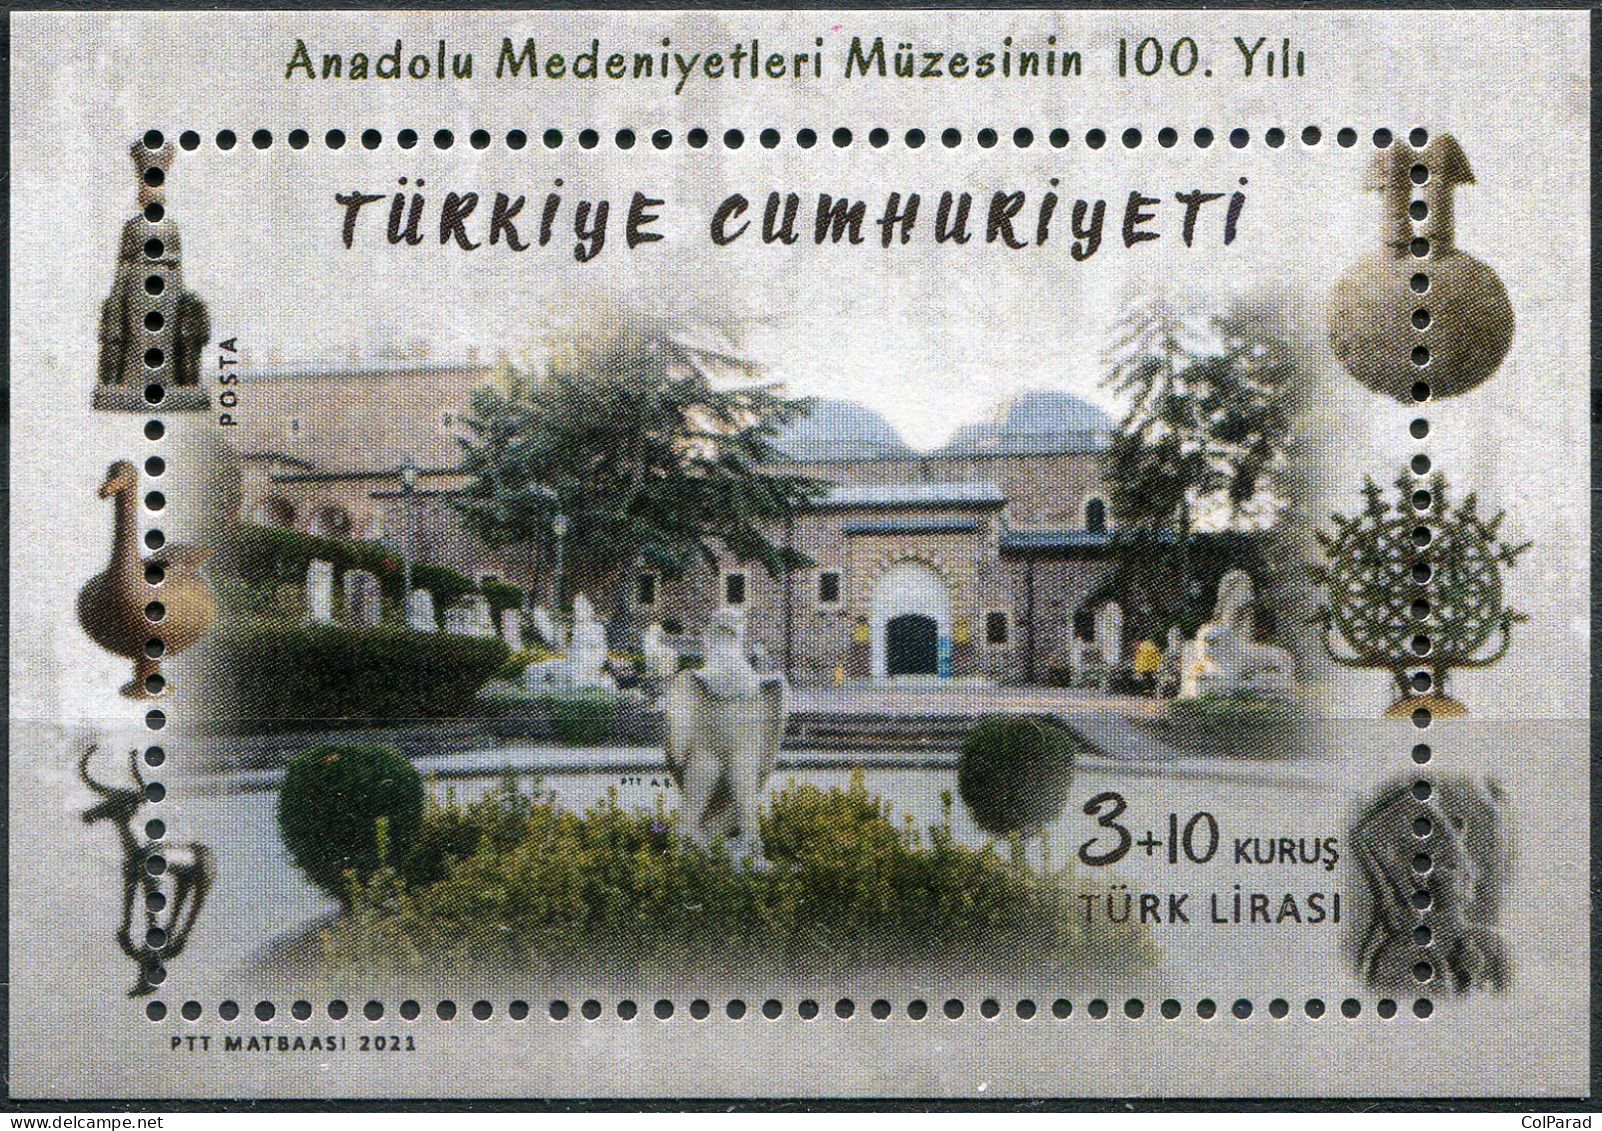 TURKEY - 2021 - SOUVENIR SHEET MNH ** - Museum Of Anatolian Civilizations - Unused Stamps